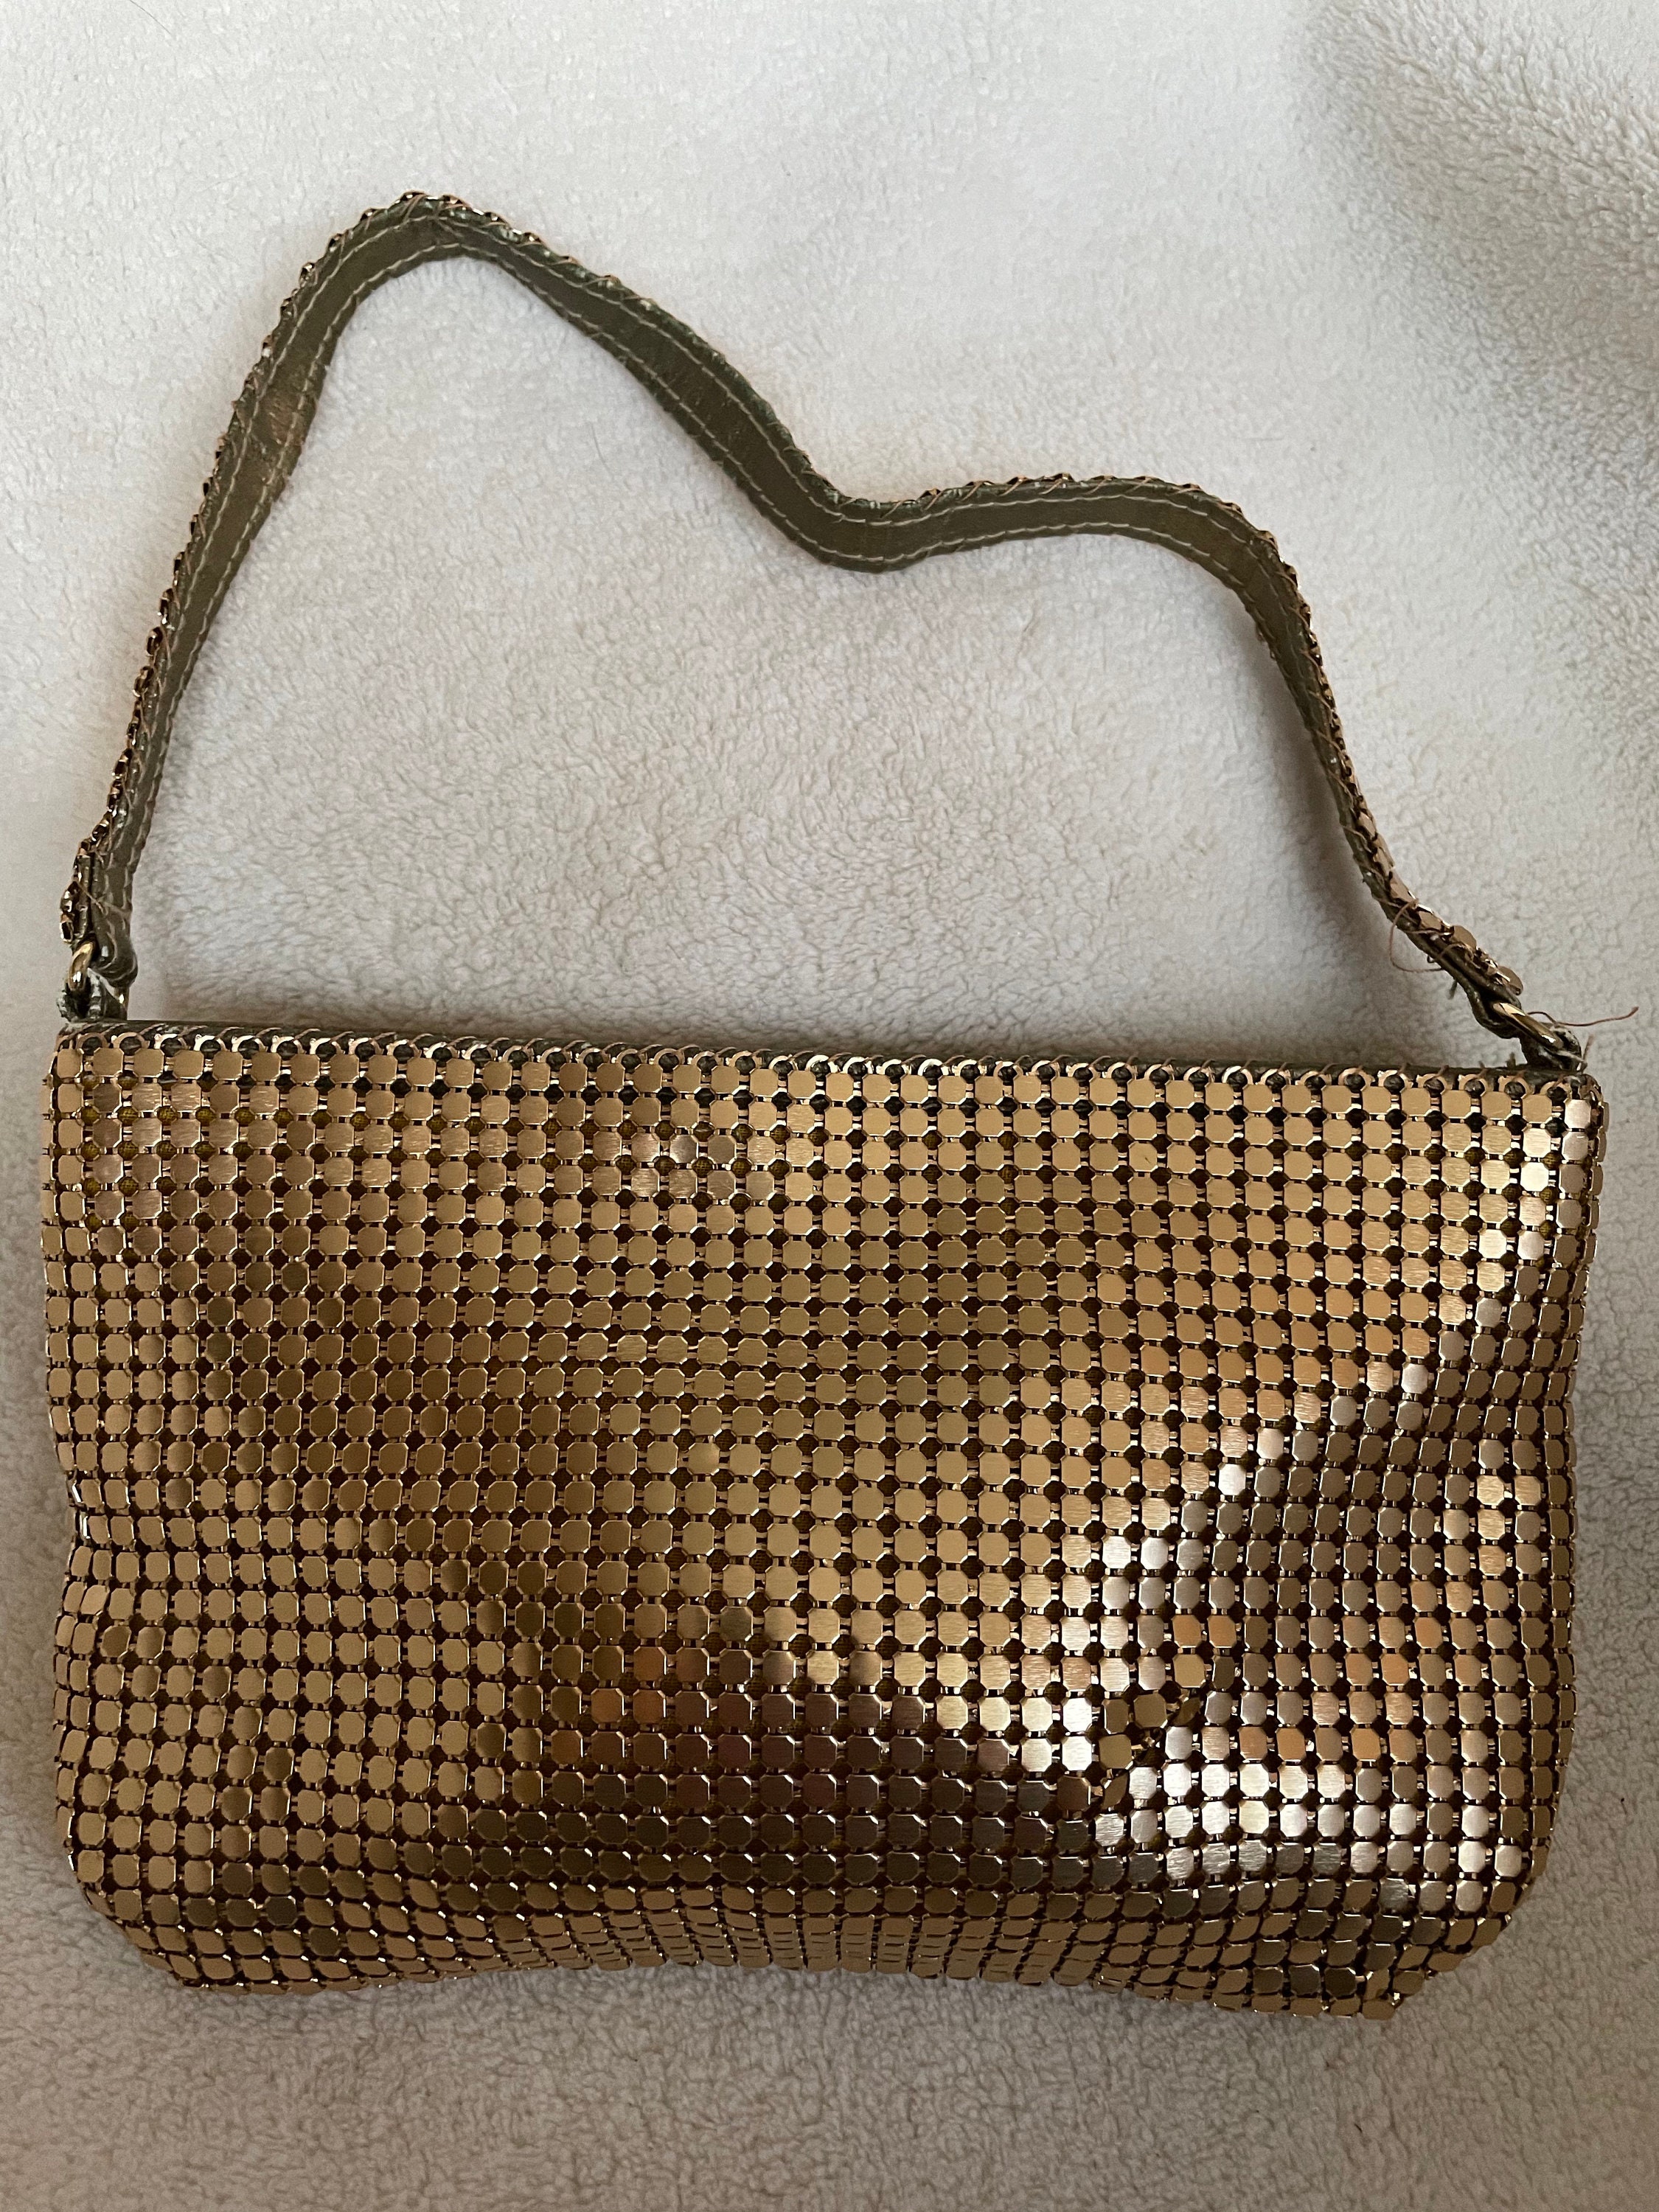 La Regale Vintage Brass Mesh Purse Gold Tone Small Handbag 